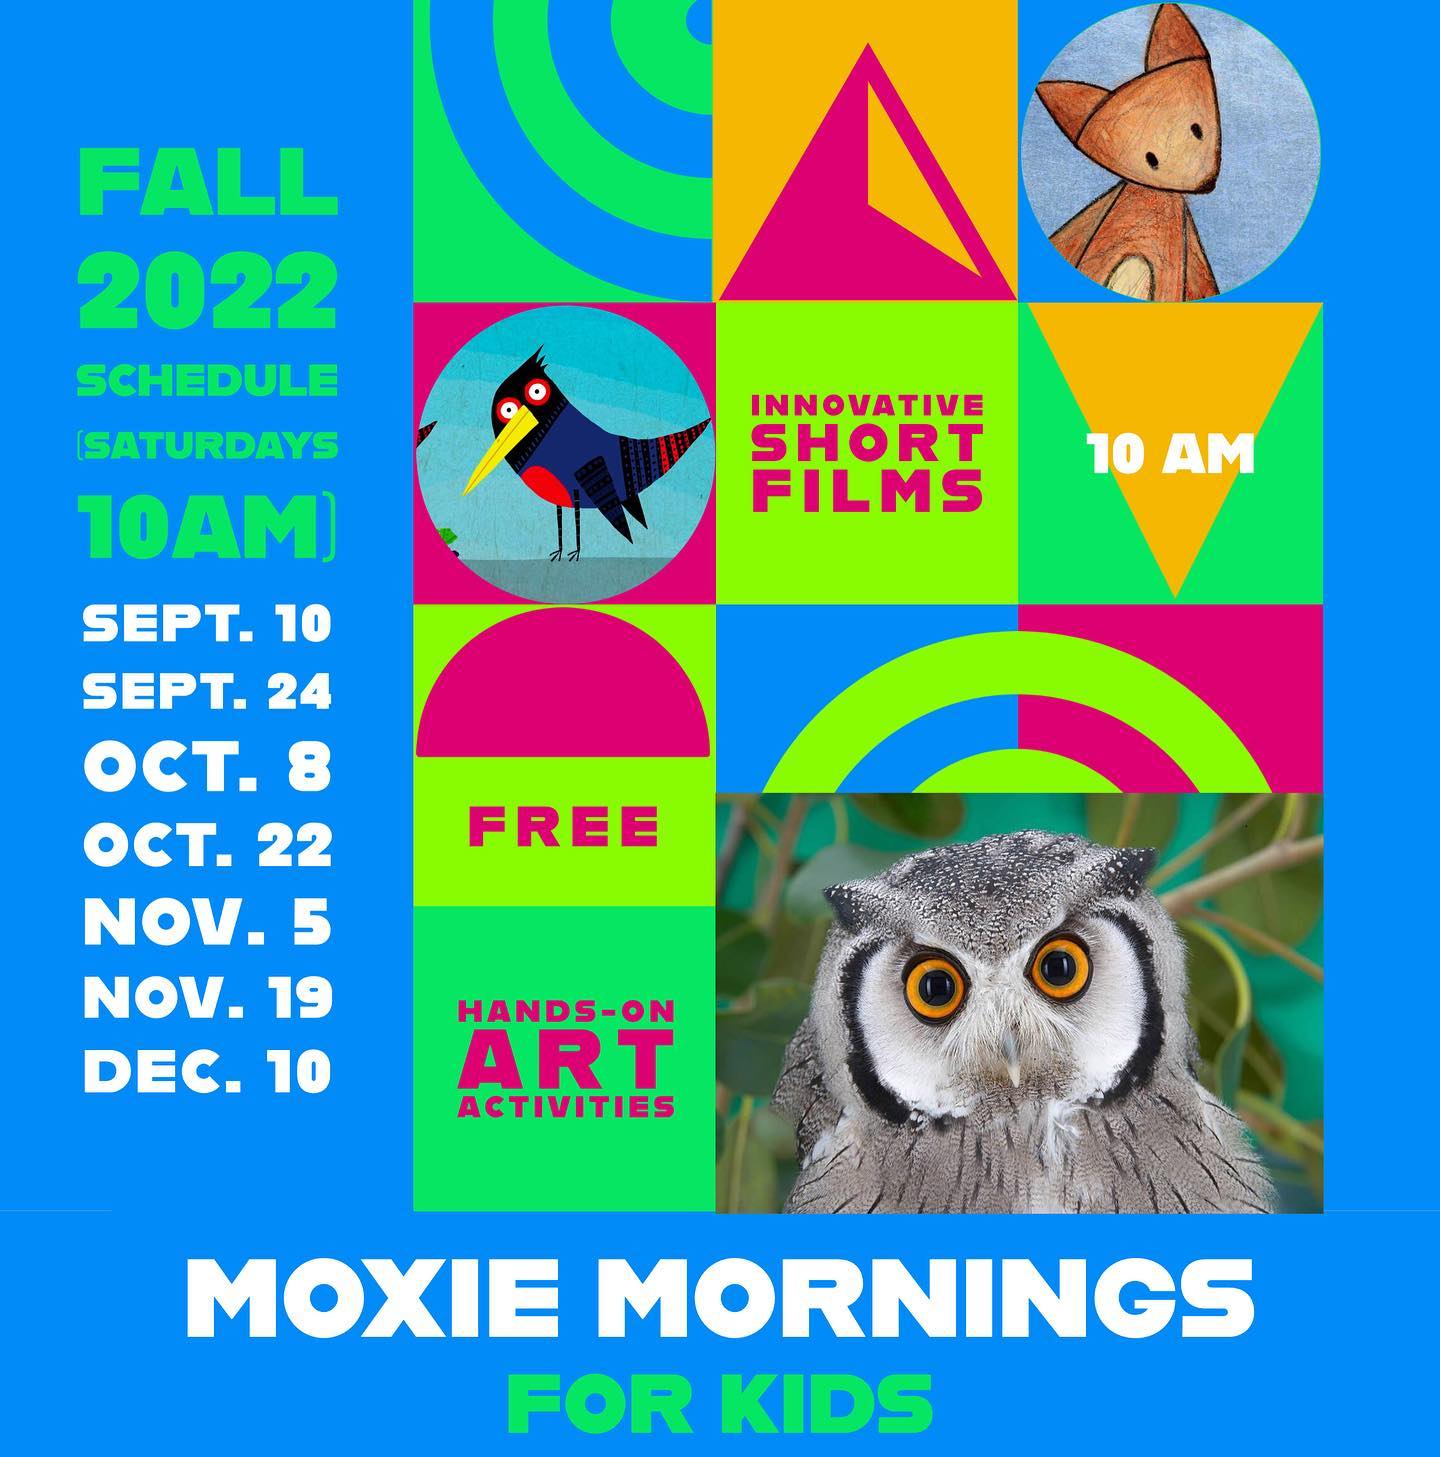 Moxie Mornings for Kids @ Moxie Cinema